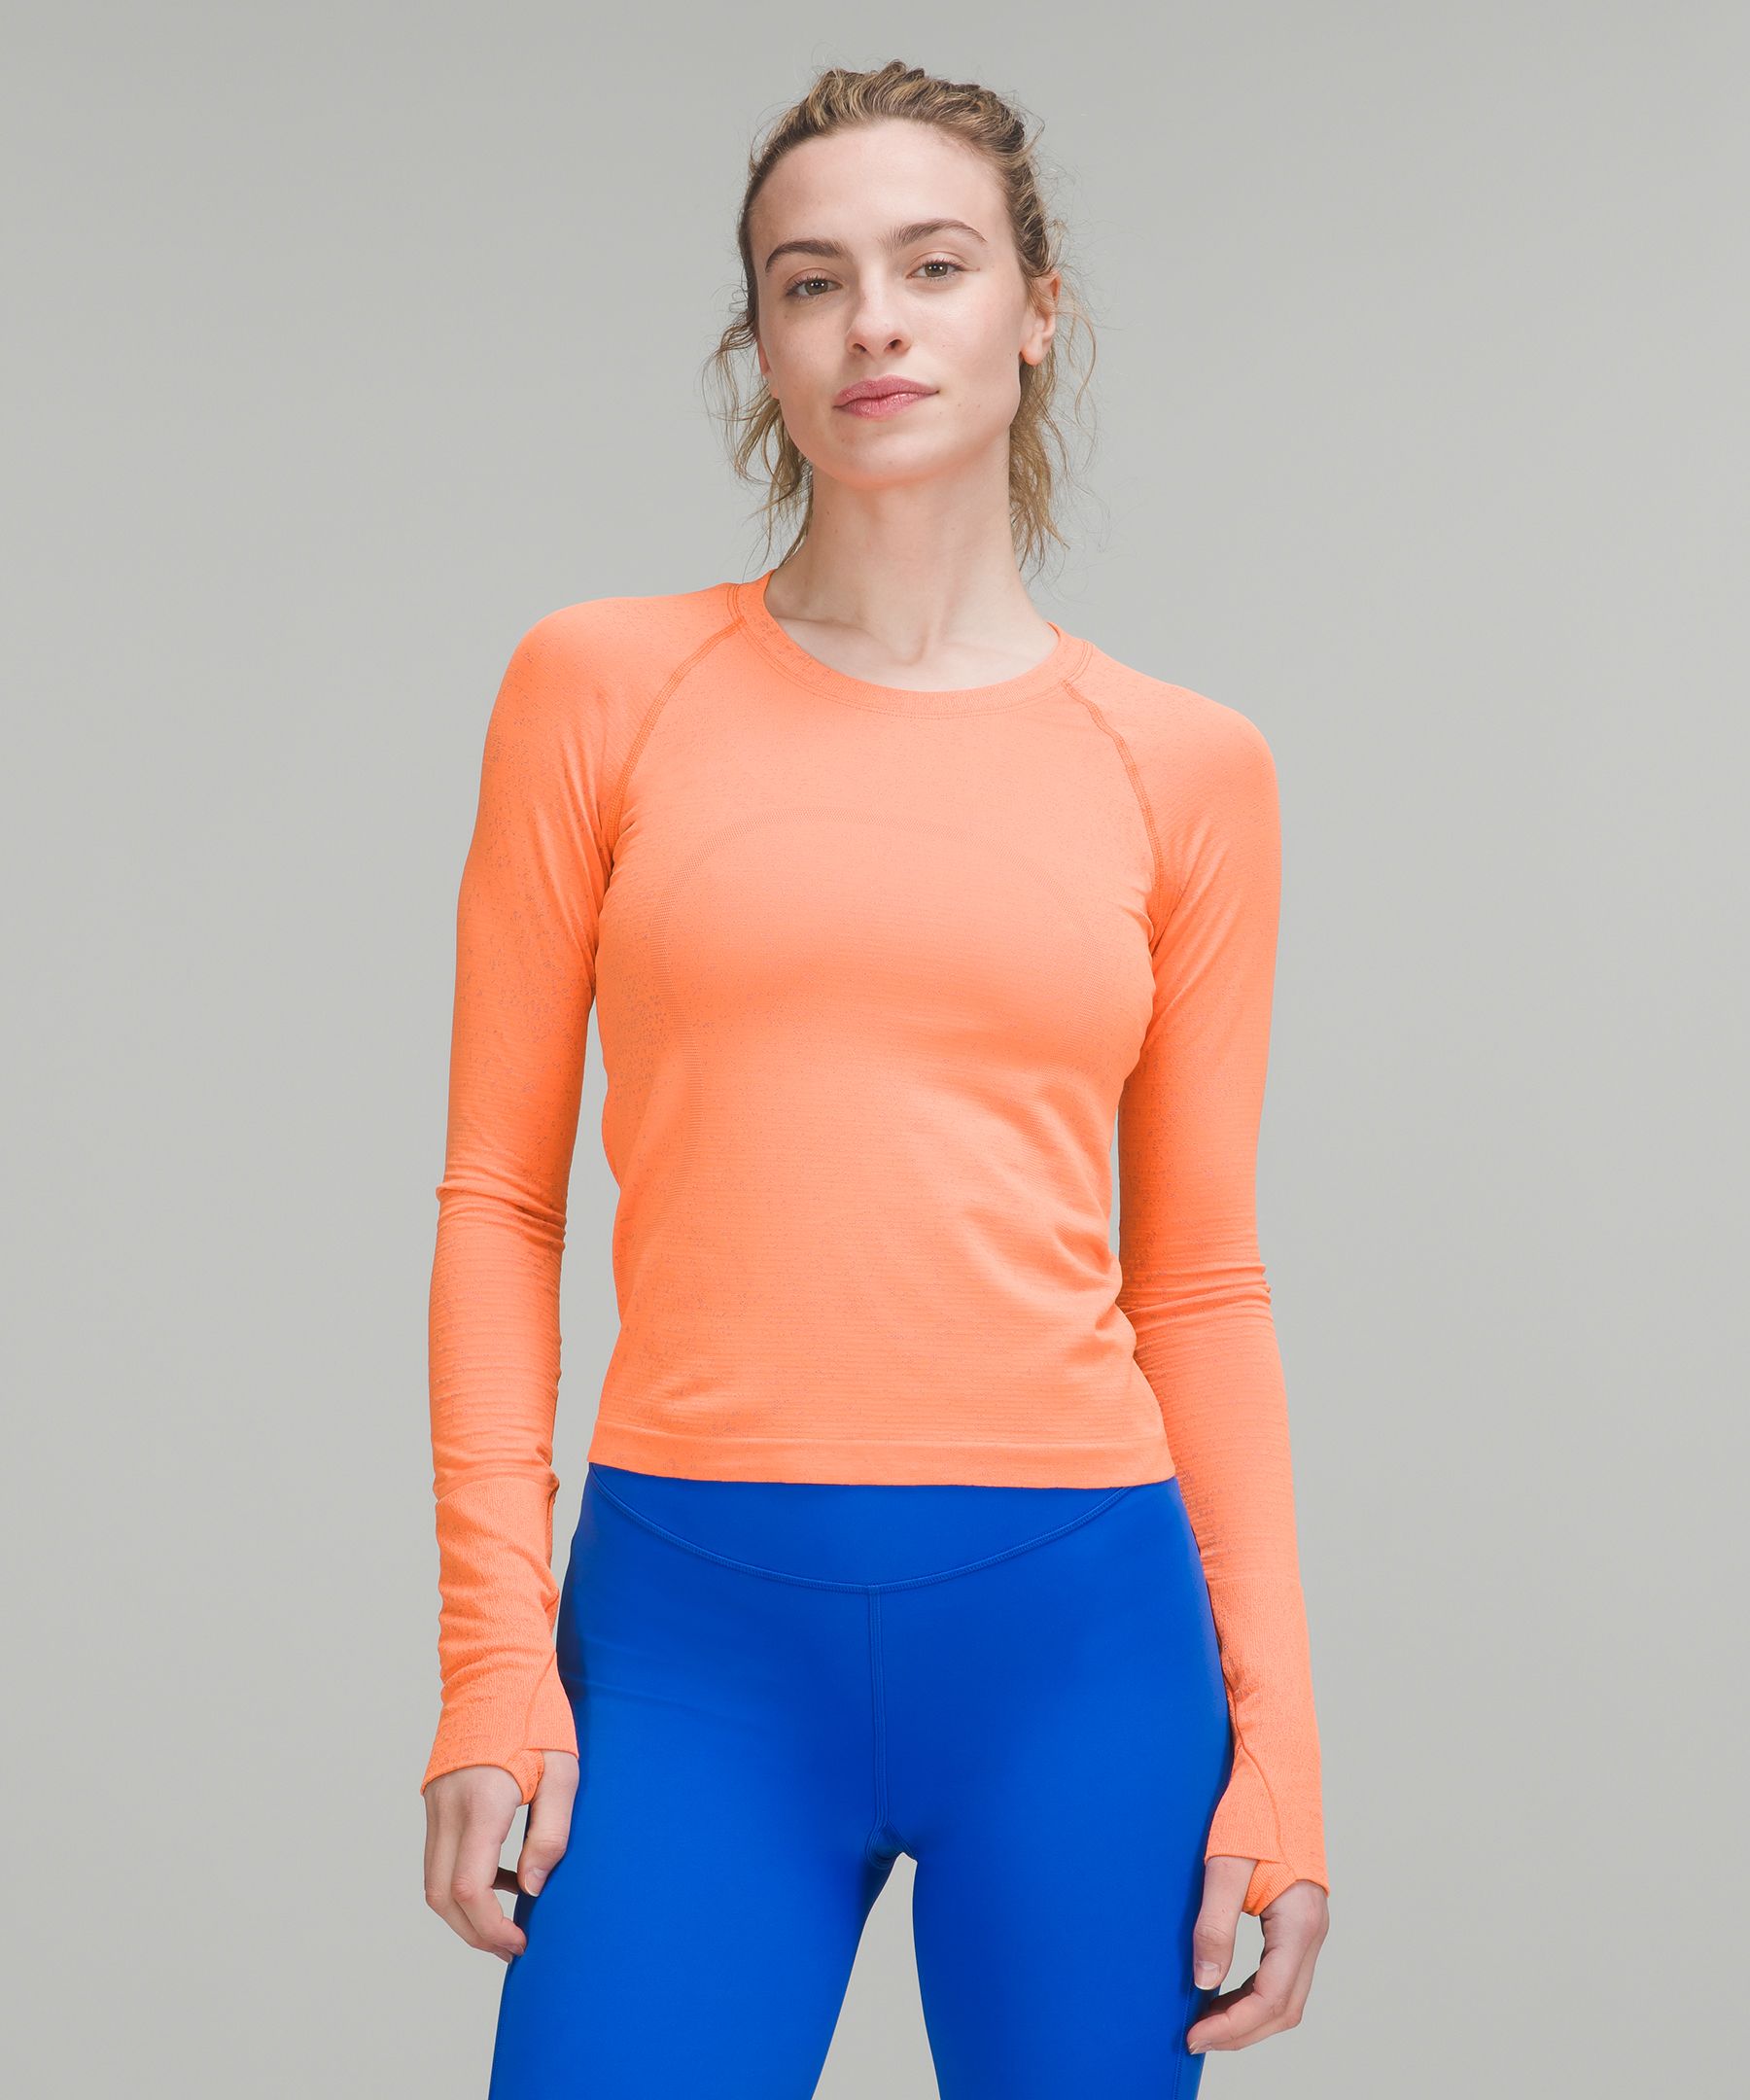 Lululemon Swiftly Tech Long Sleeve Shirt 2.0 Race Length In Distorted Noise Highlight Orange/lunar Rock